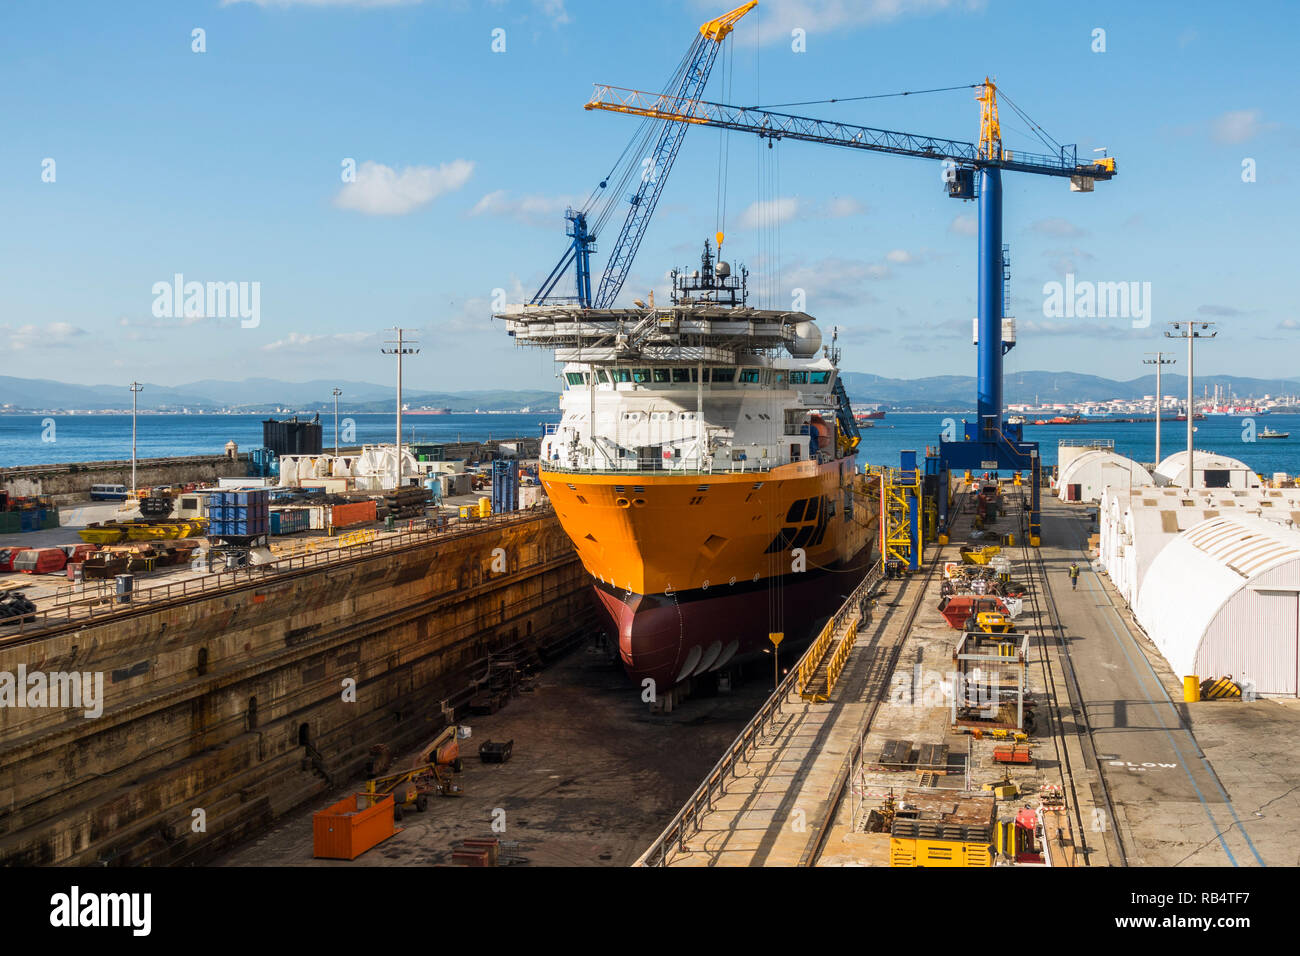 Dry dock. SBM installer Vessel, support vessel being repaired in dry dock, British overseas territory of Gibraltar. Stock Photo